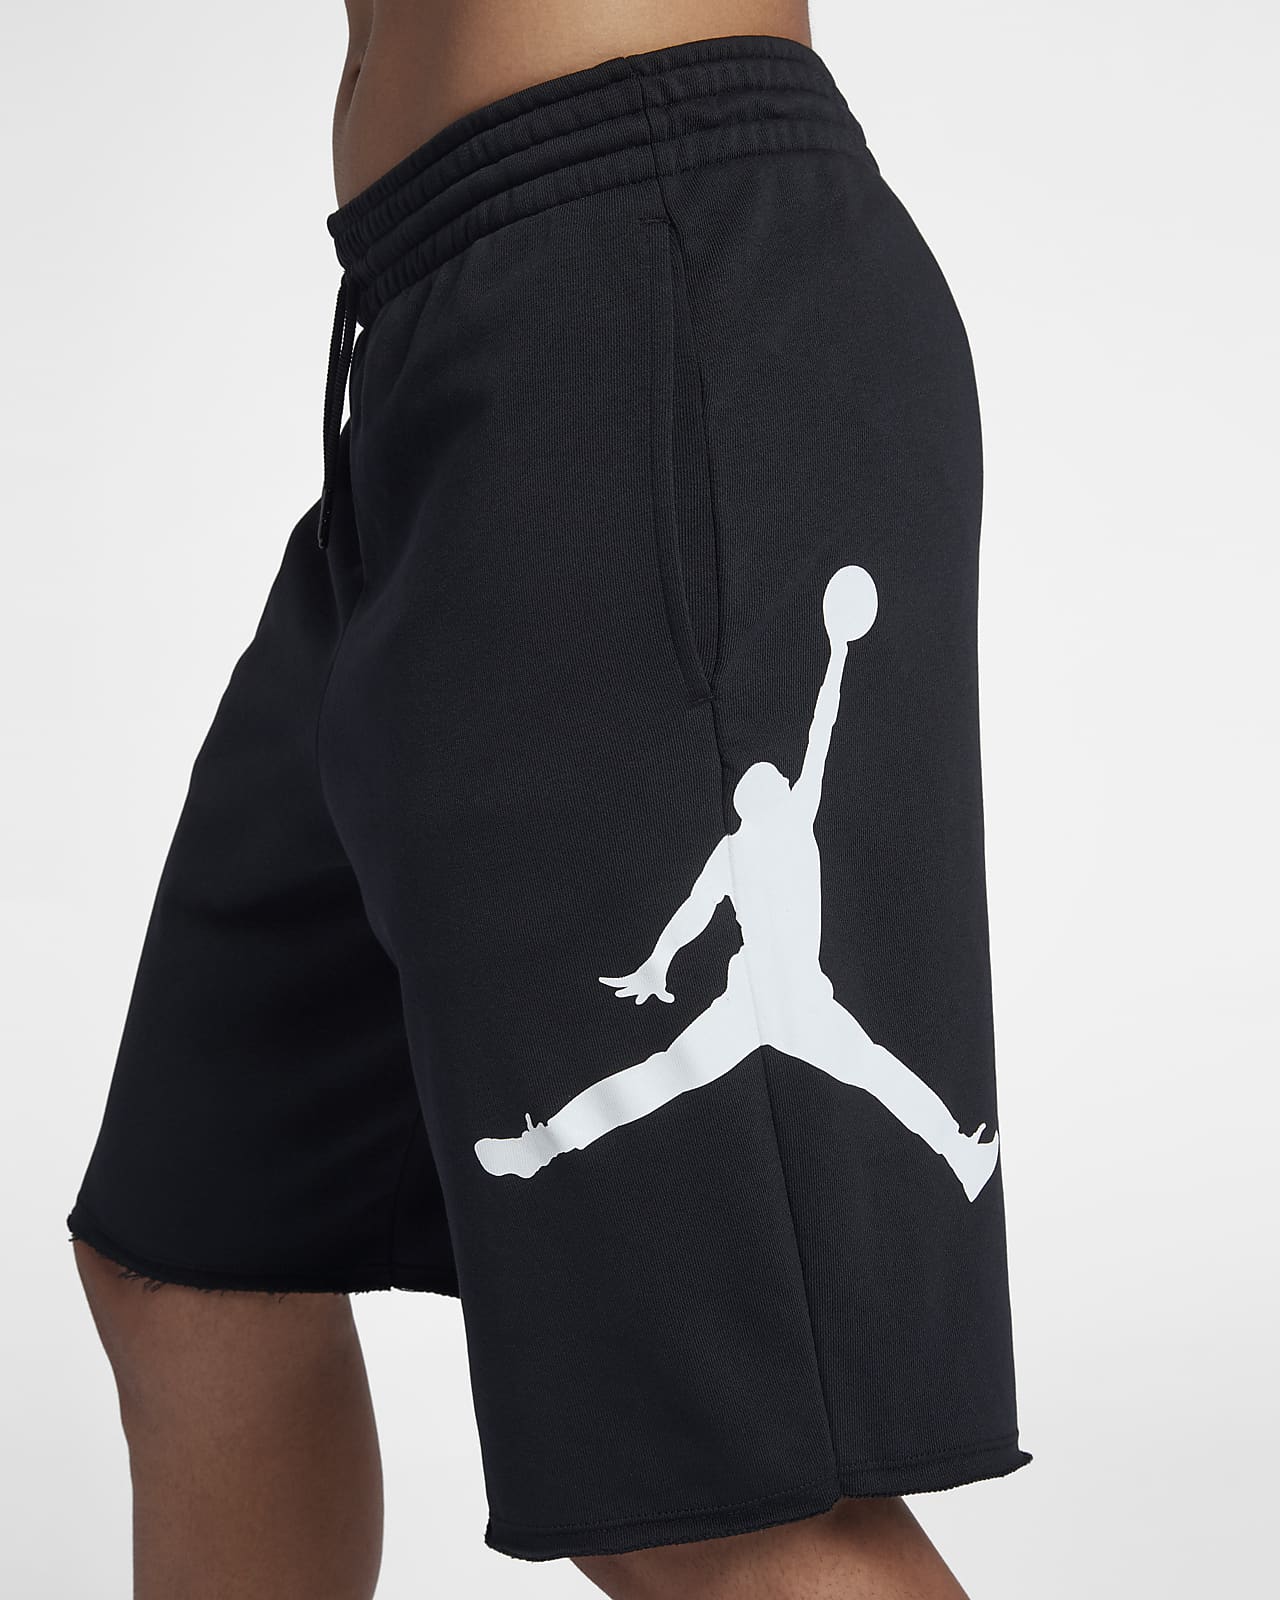 jordan logo shorts